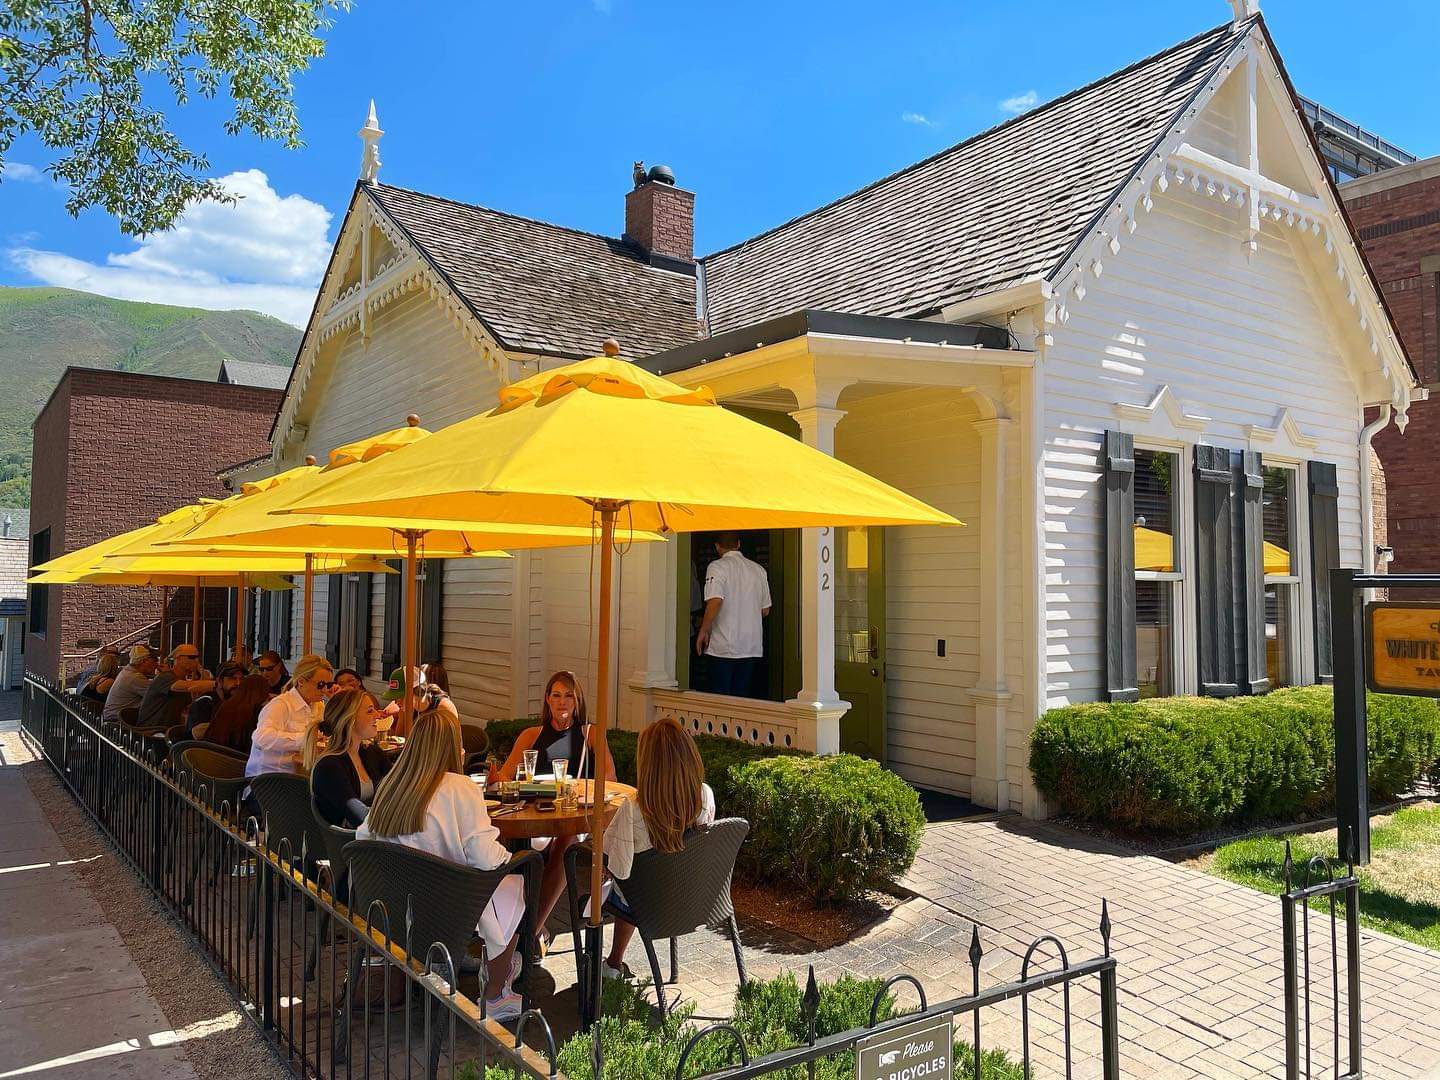 Yellow umbrellas on a patio outside a white cottage restaurant